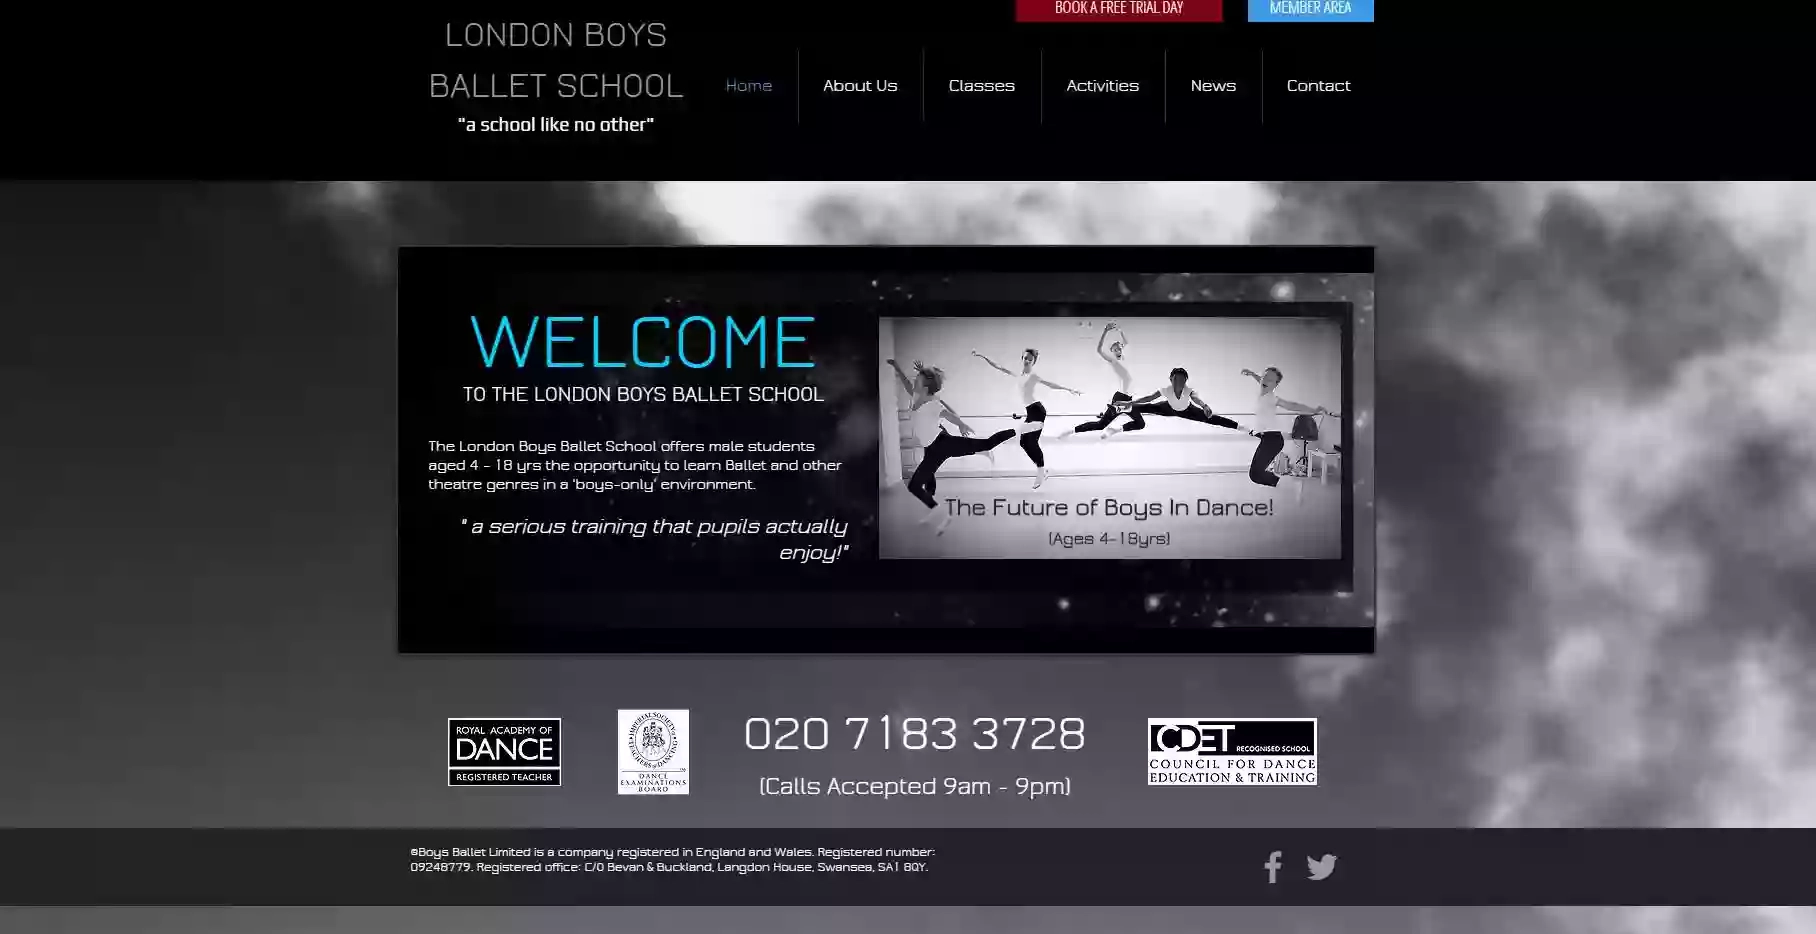 LONDON BOYS BALLET SCHOOL